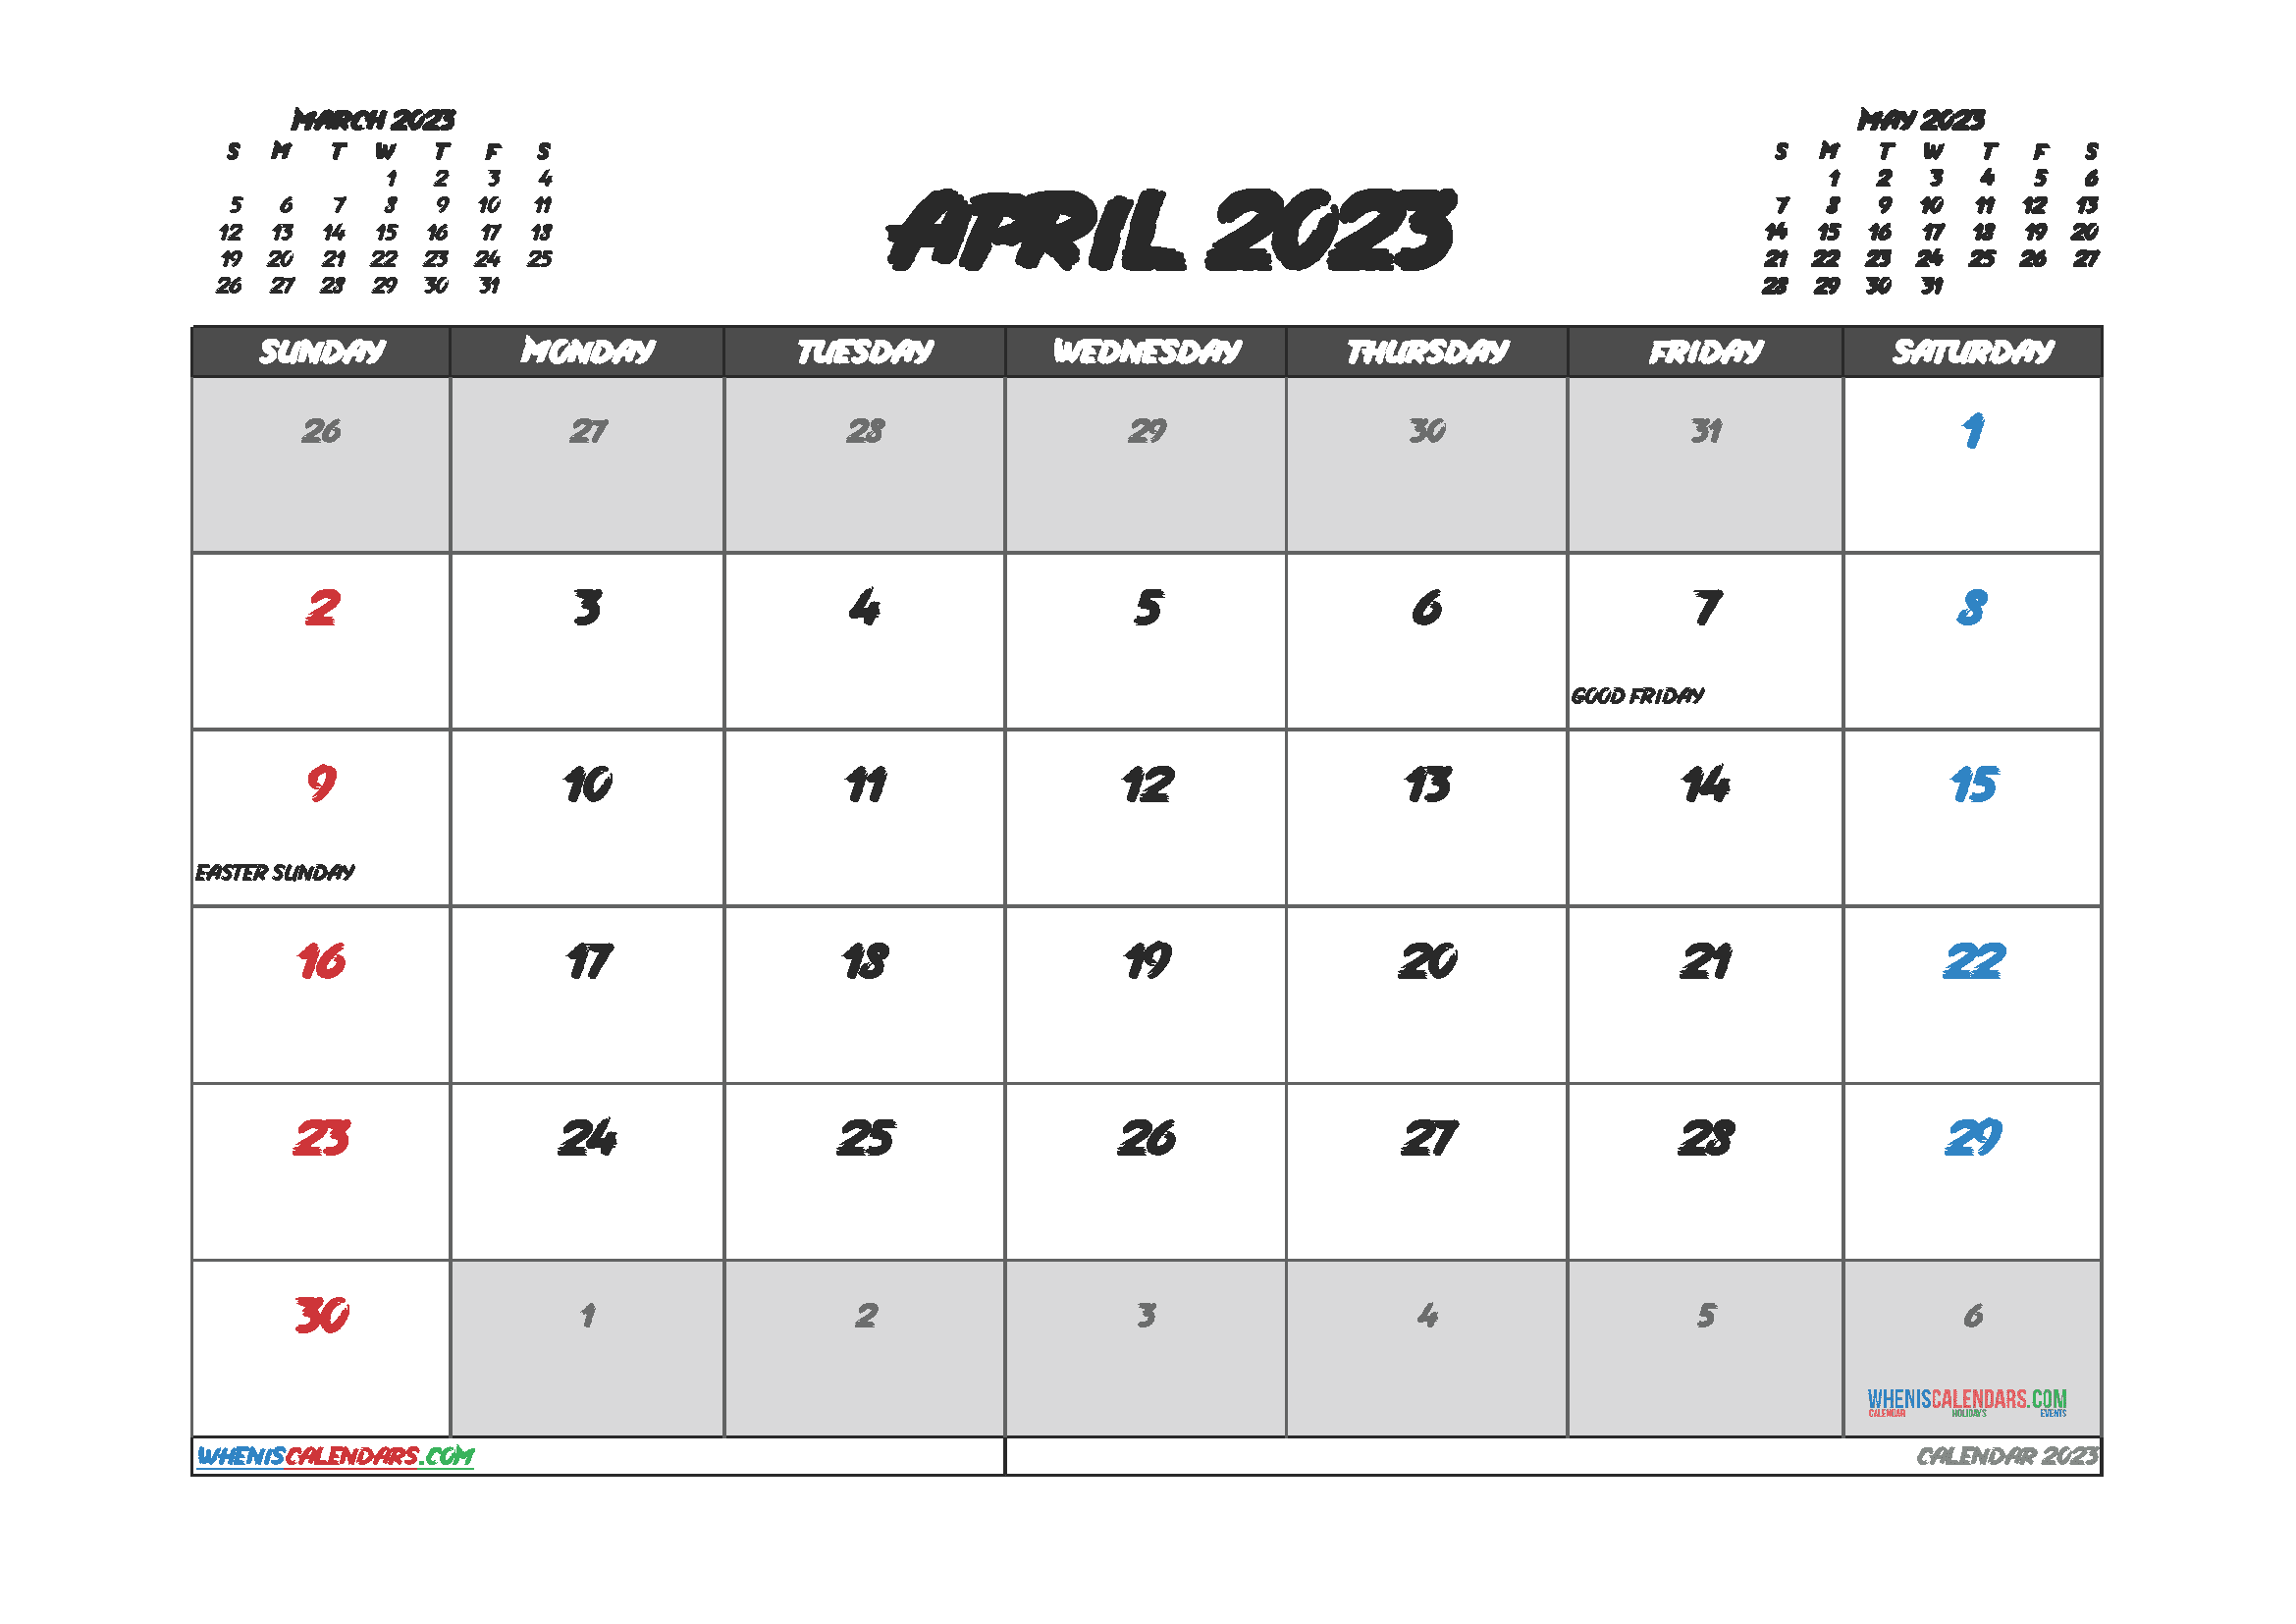 Free April Calendar 2023 Printable